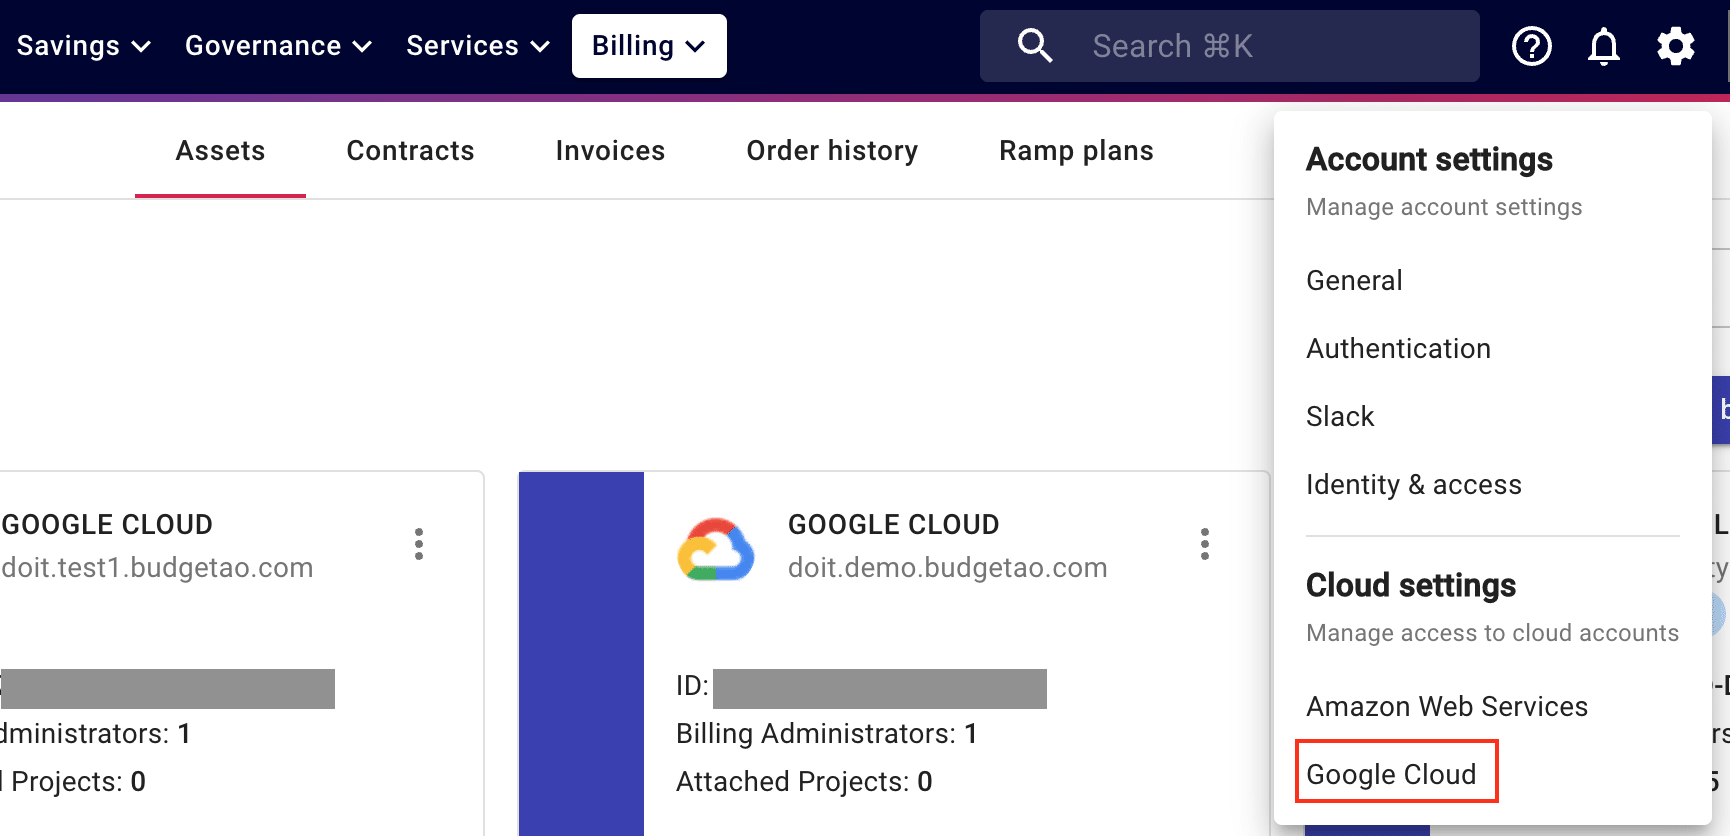 A screenshot showing the Google Cloud settings menu item